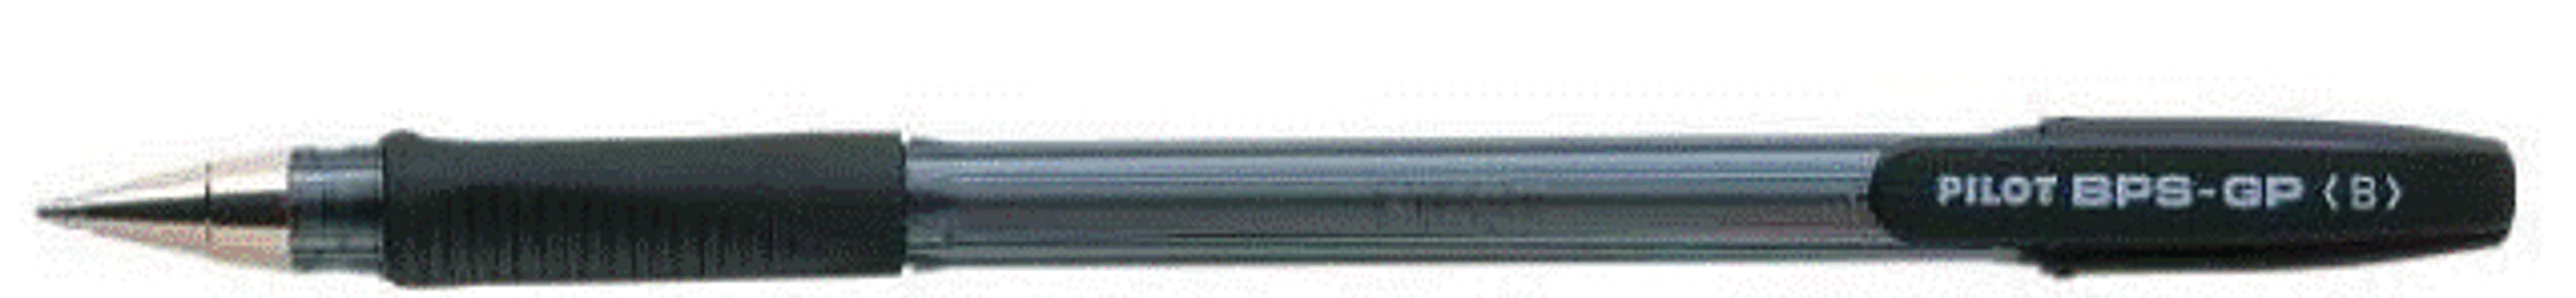 bps-gp ballpoint pen with grip